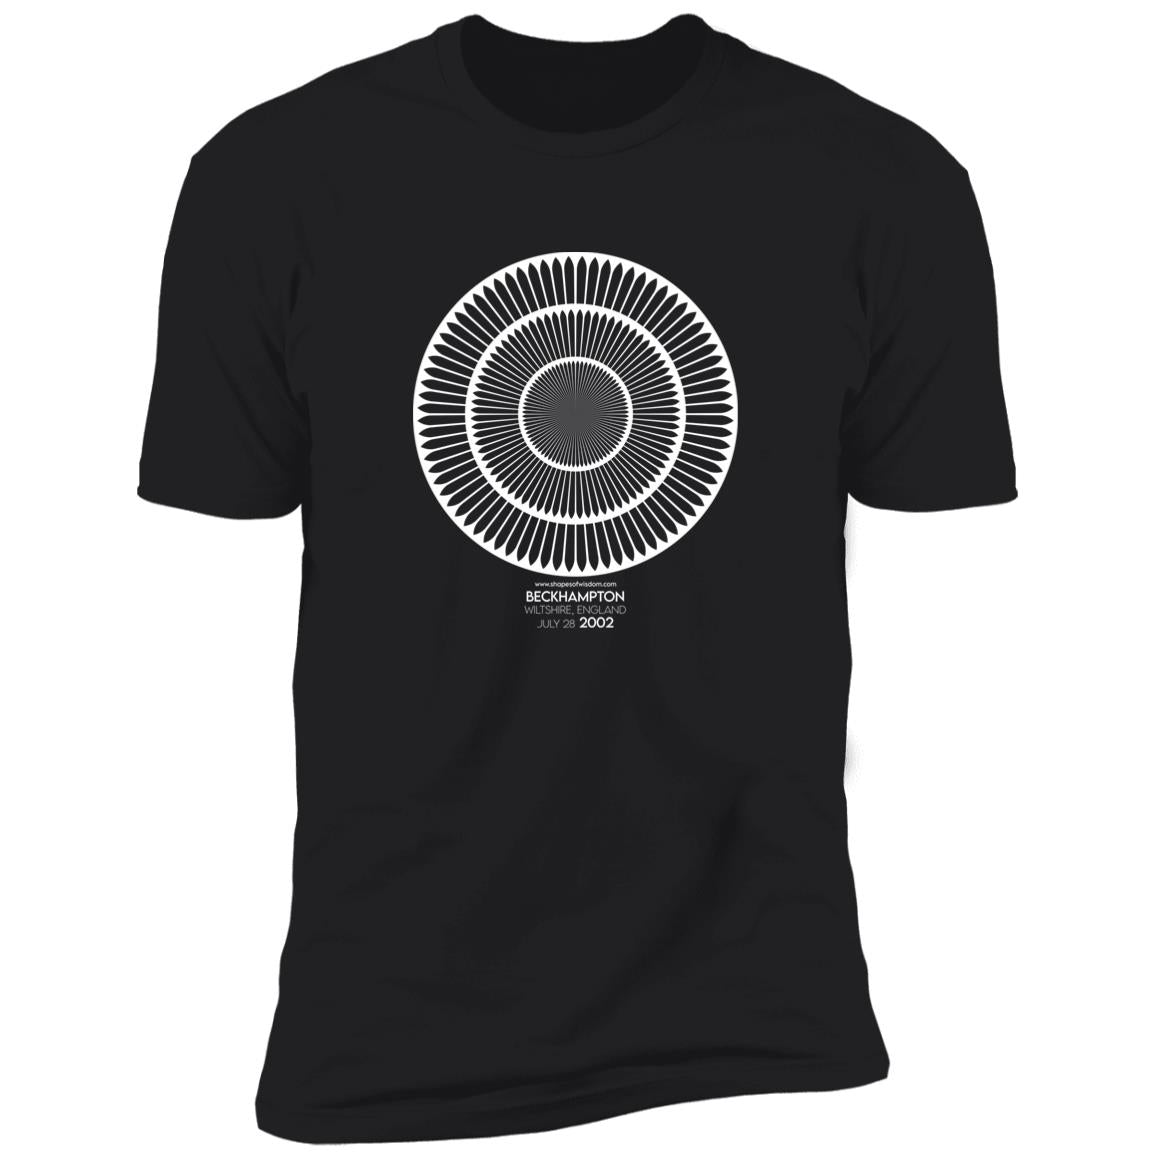 Crop Circle Premium T-Shirt - Beckhampton